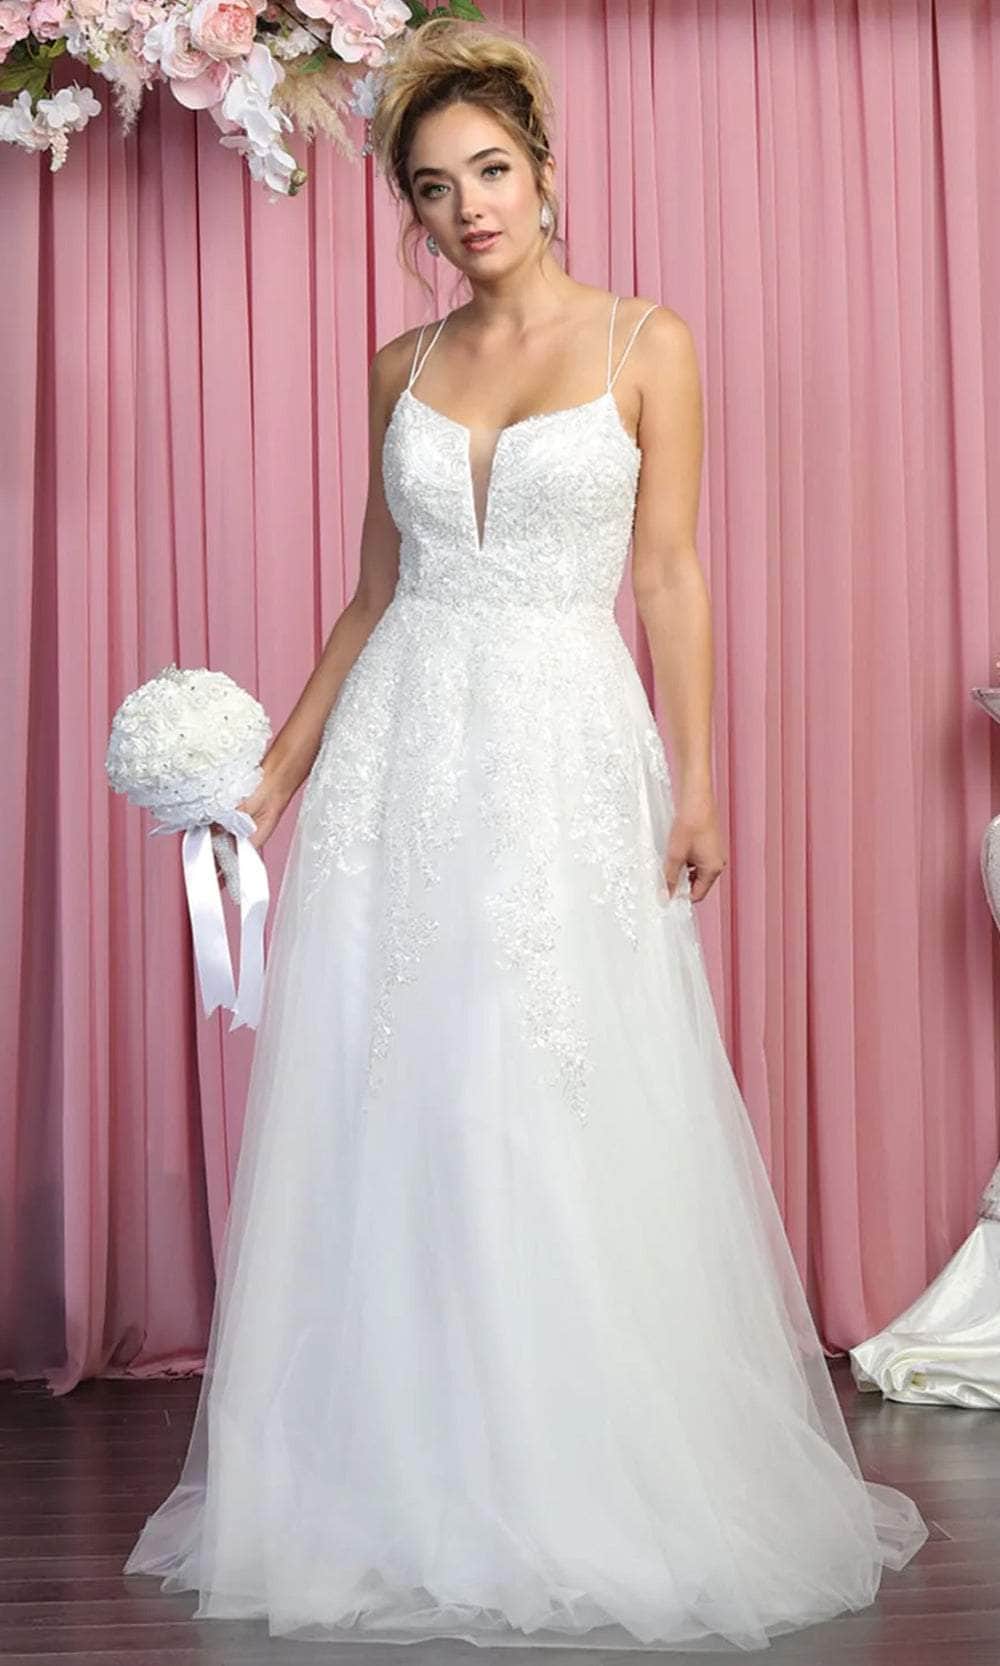 Image of May Queen Bridal RQ7916 - Embellished V Neck A-Line Dress